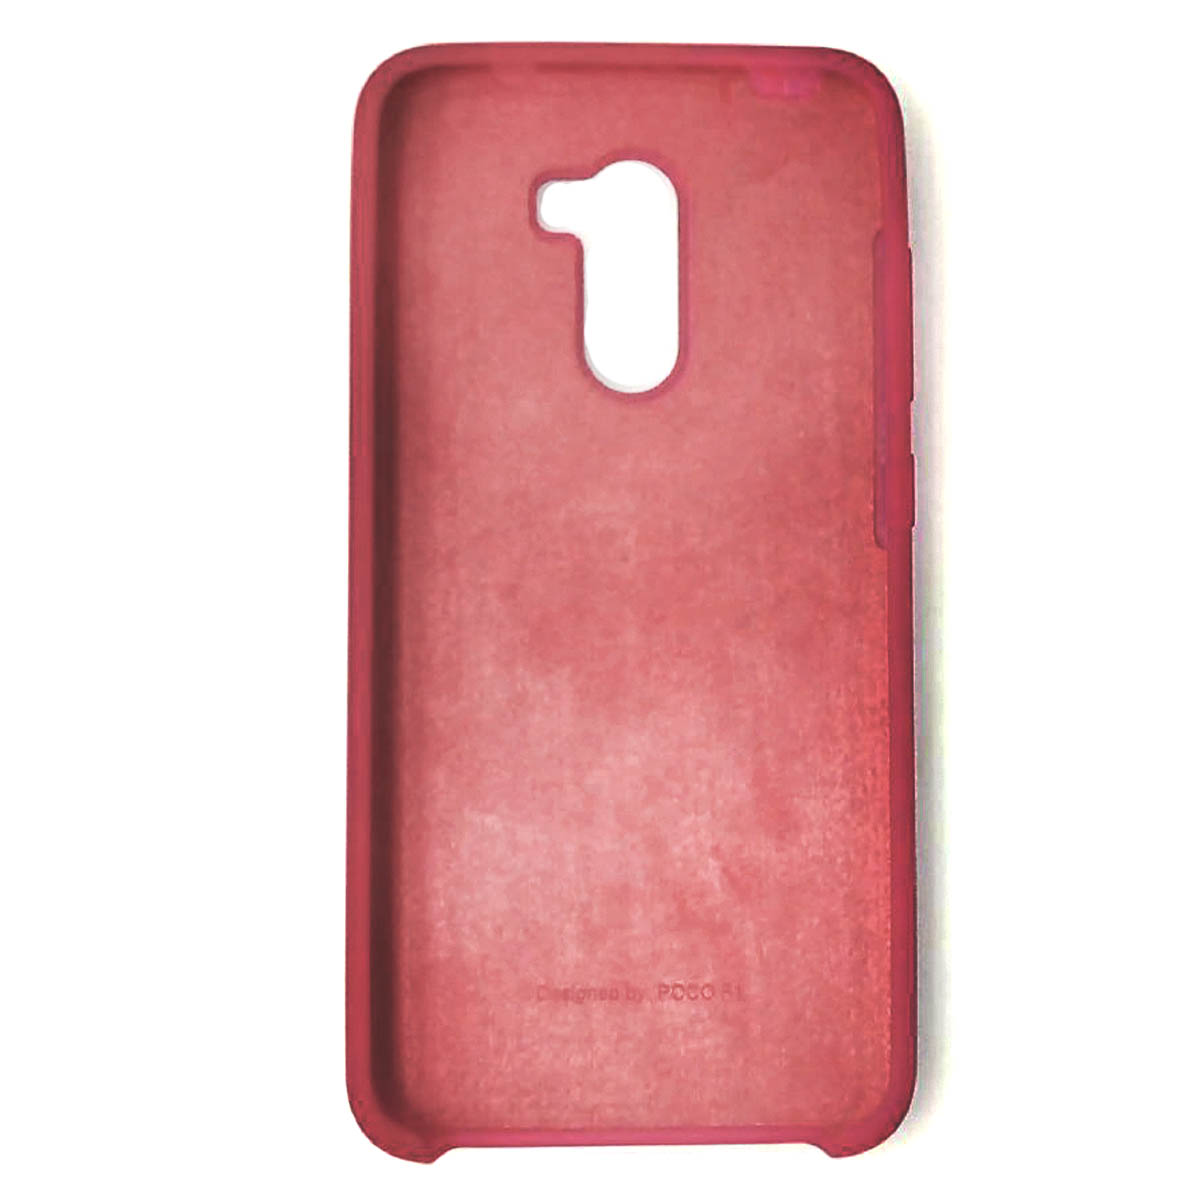 Чехол накладка Silicon Cover для XIAOMI POCOPHONE F1, силикон, бархат, цвет вишневый